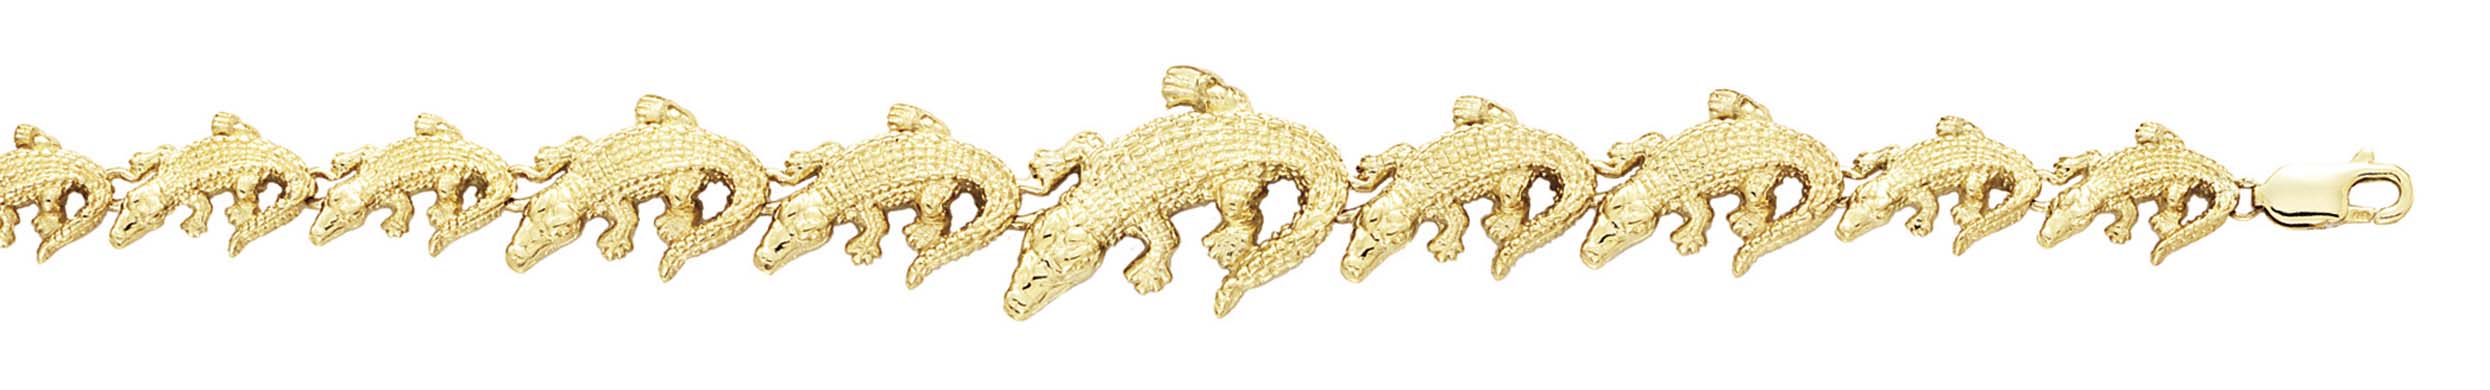 
14k Yellow Gold Alligator Bracelet - 7.25 Inch
